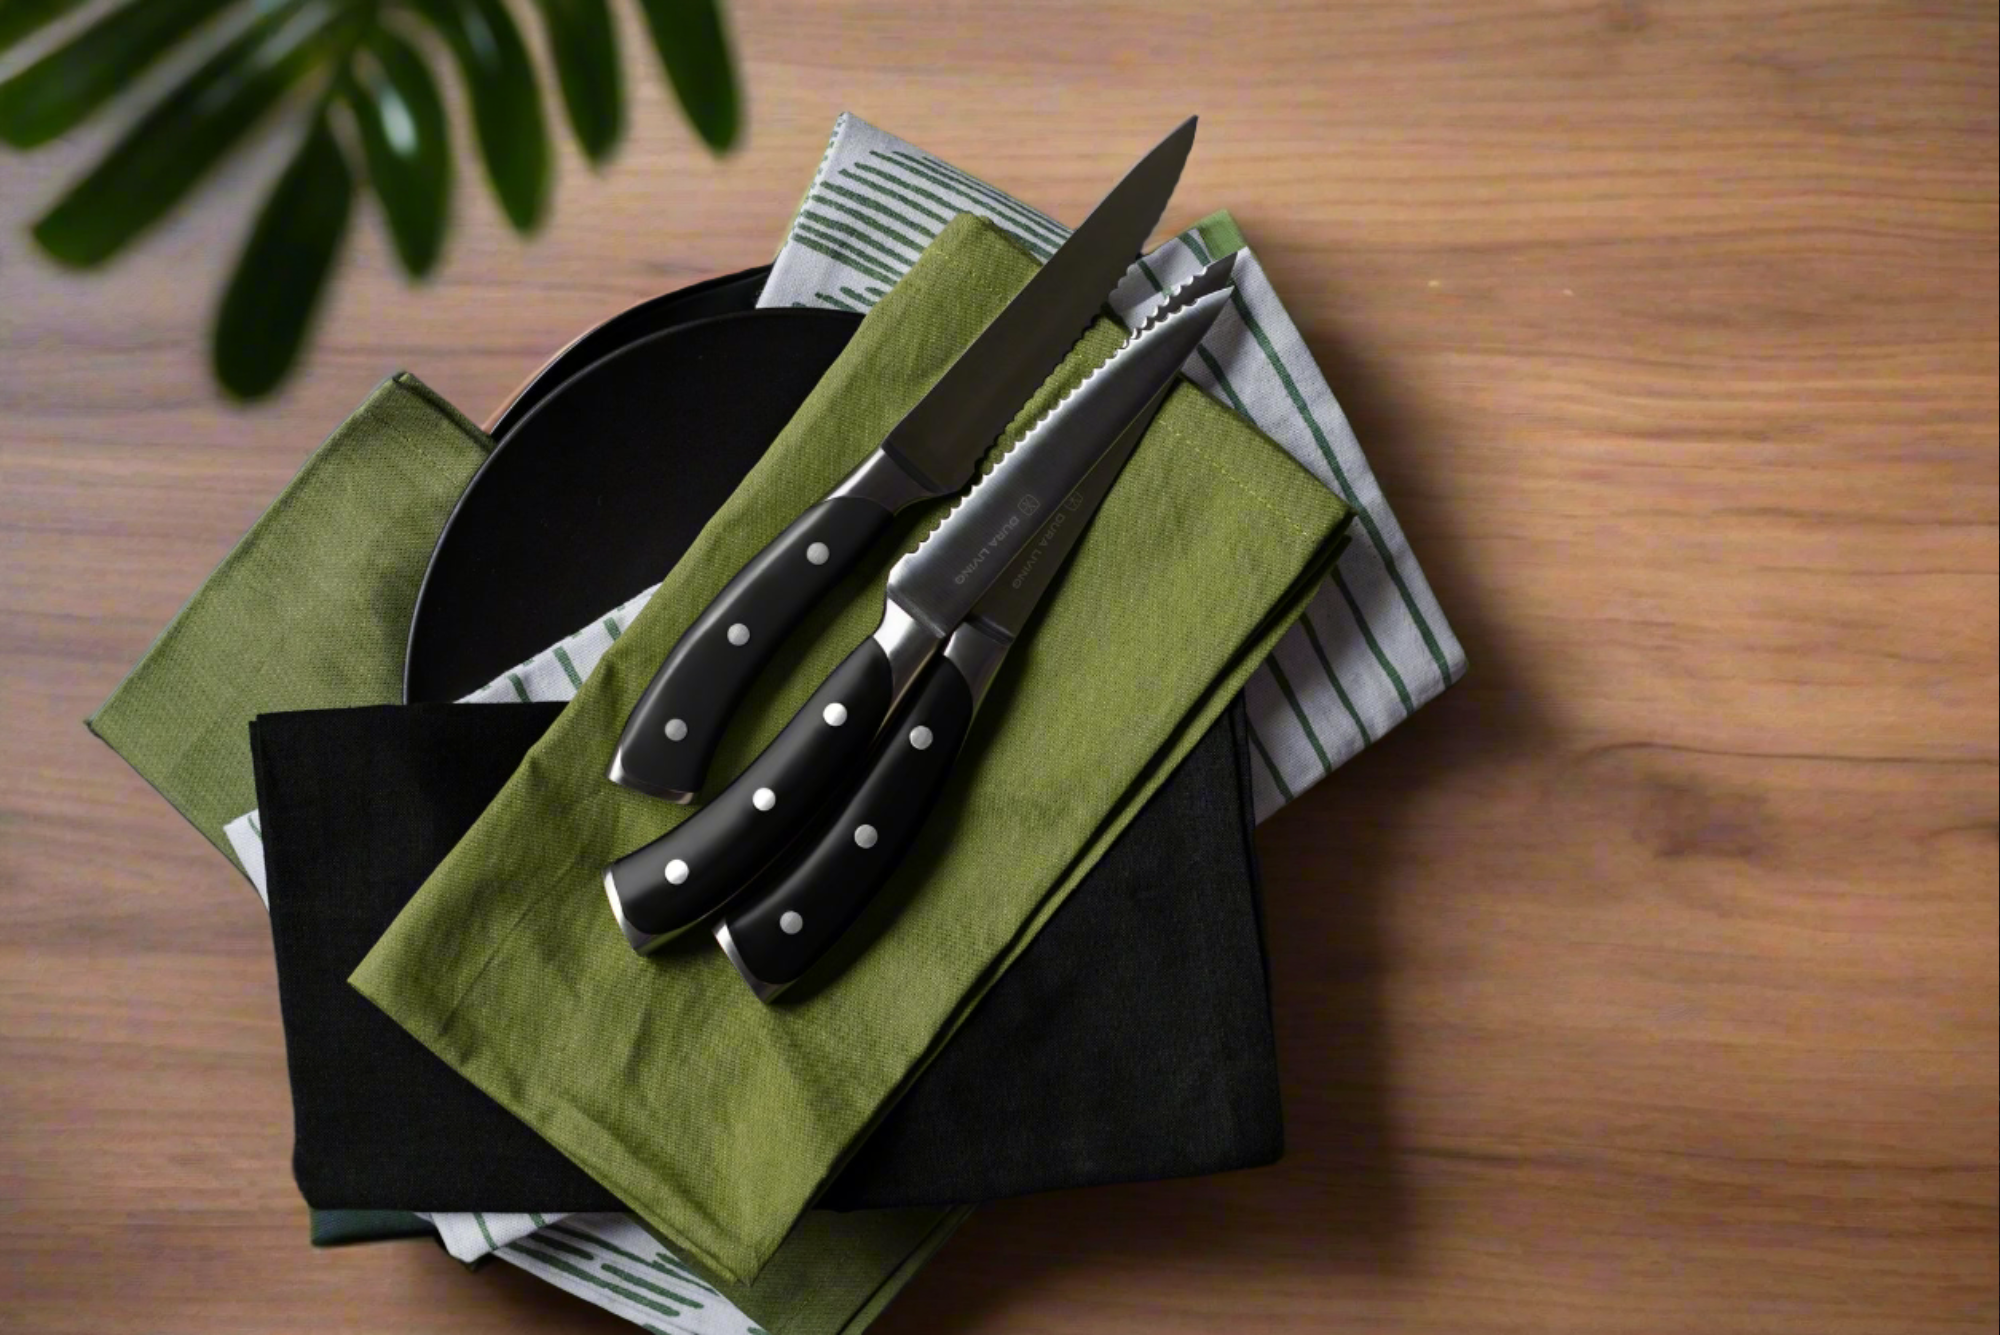 Elite Set of 4 Steak Knives - Black